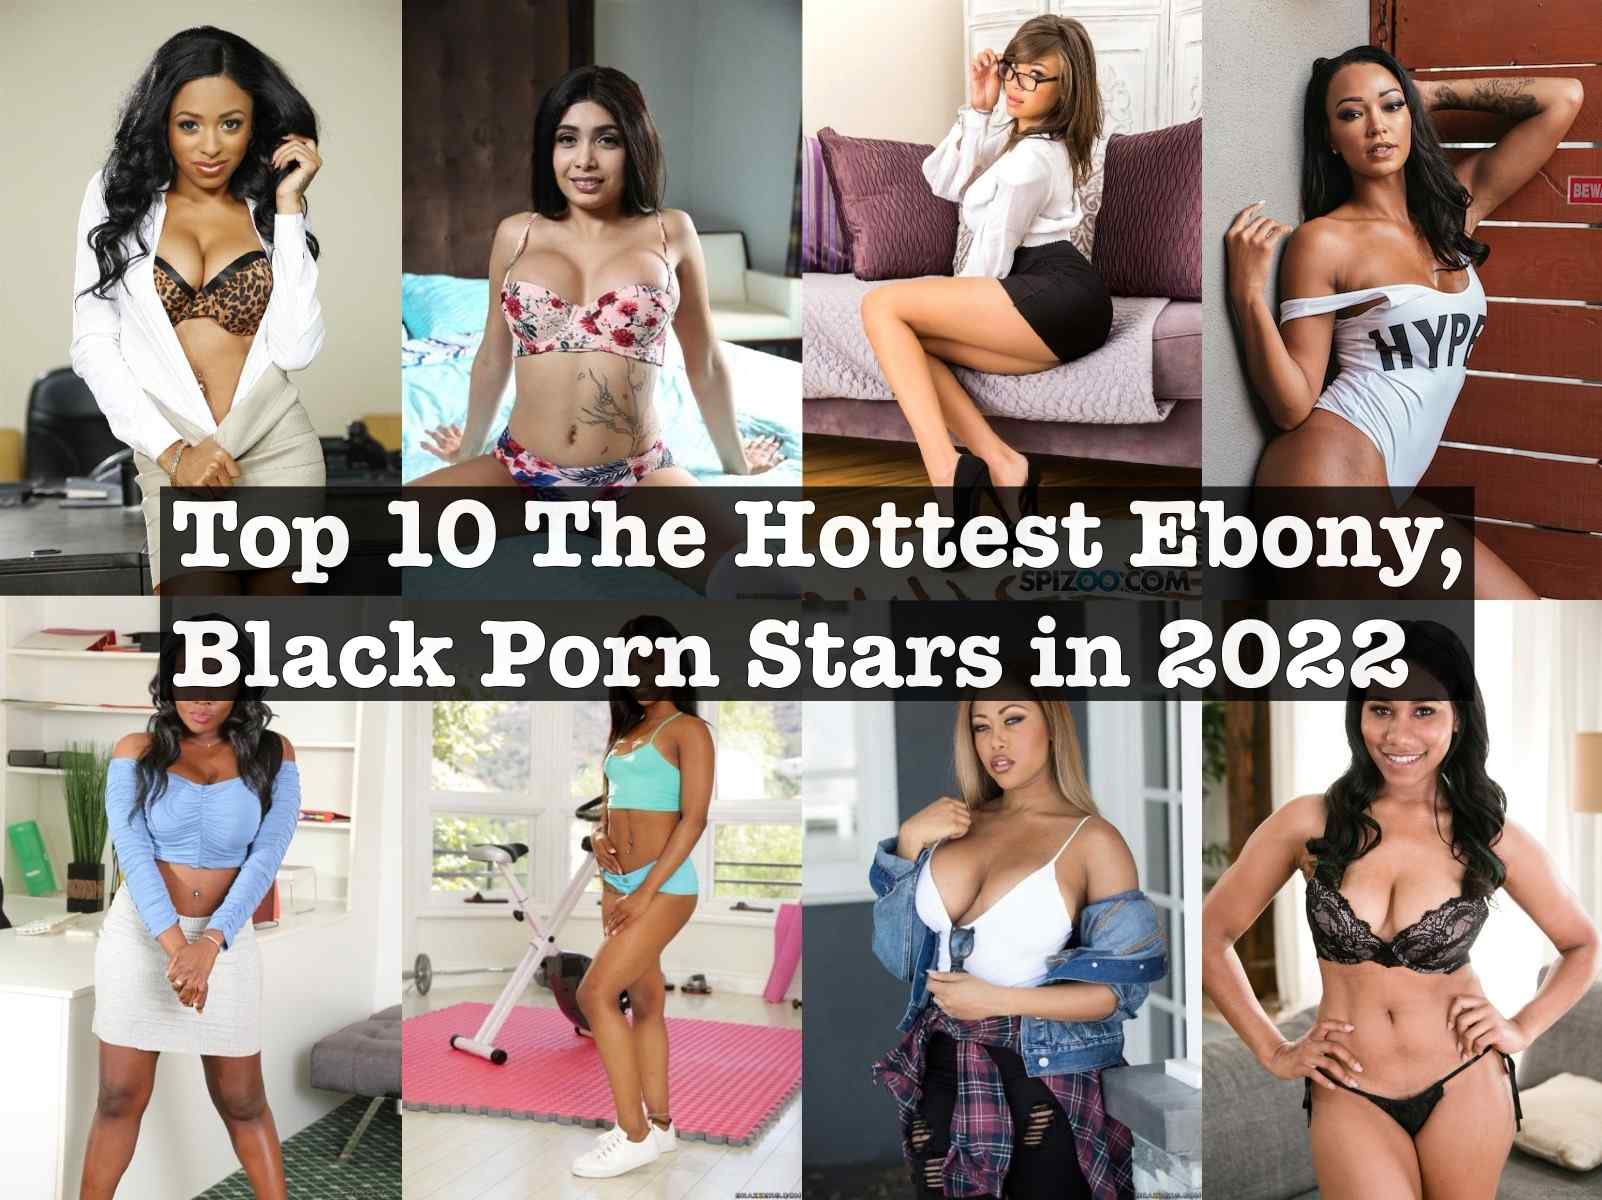 Attractive Black Female Porn Stars - Top Black Porn Stars in 2022 | Best 10 Hottest Ebony